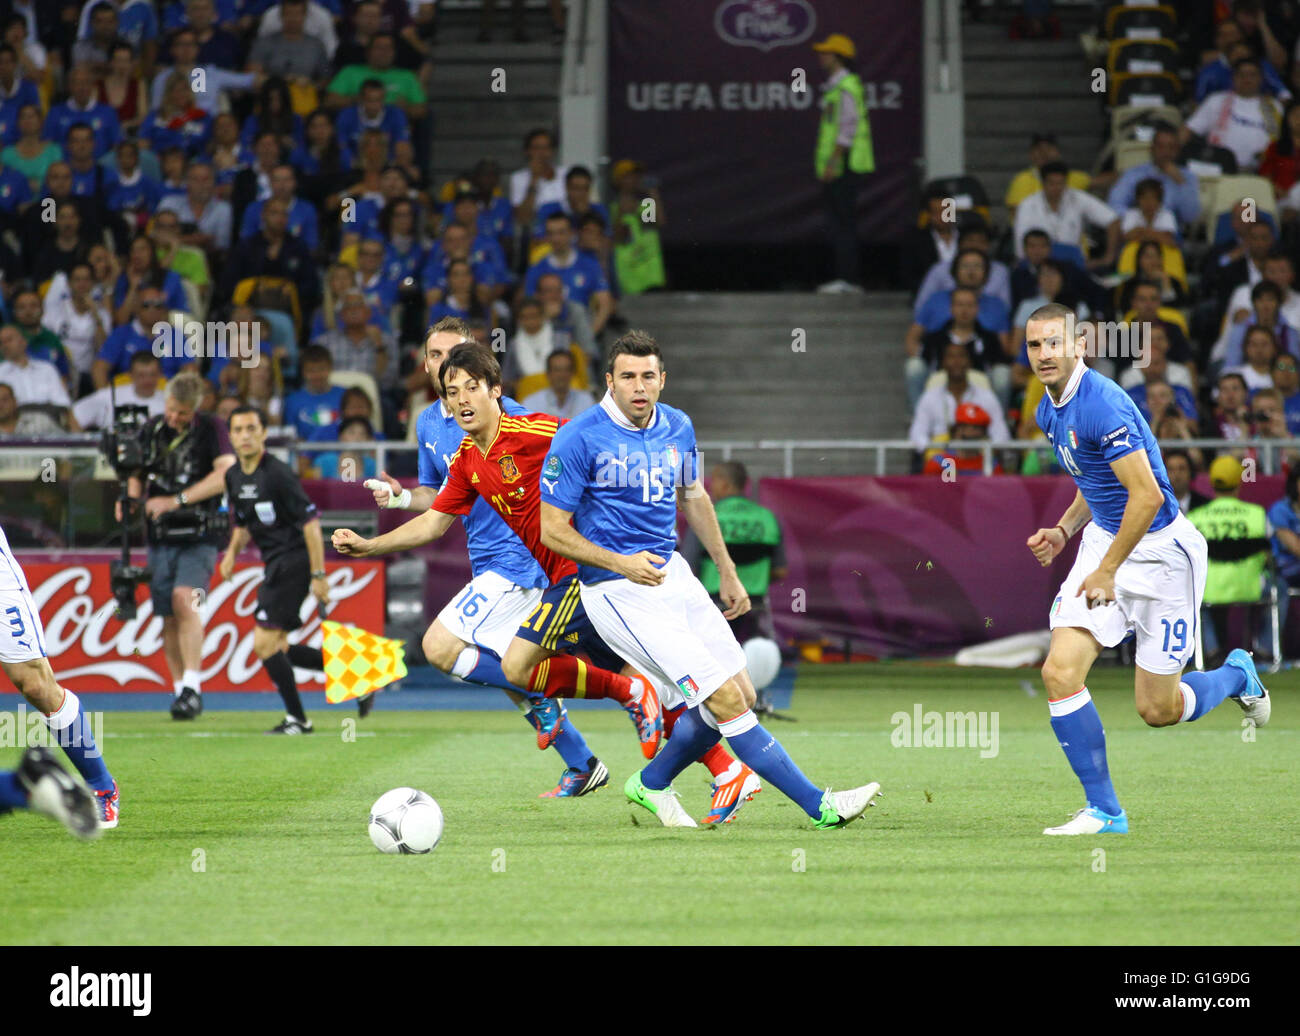 UEFA EURO 2012 Final game Spain vs Italy at Olympic stadium in Kyiv, Ukraine Stock Photo